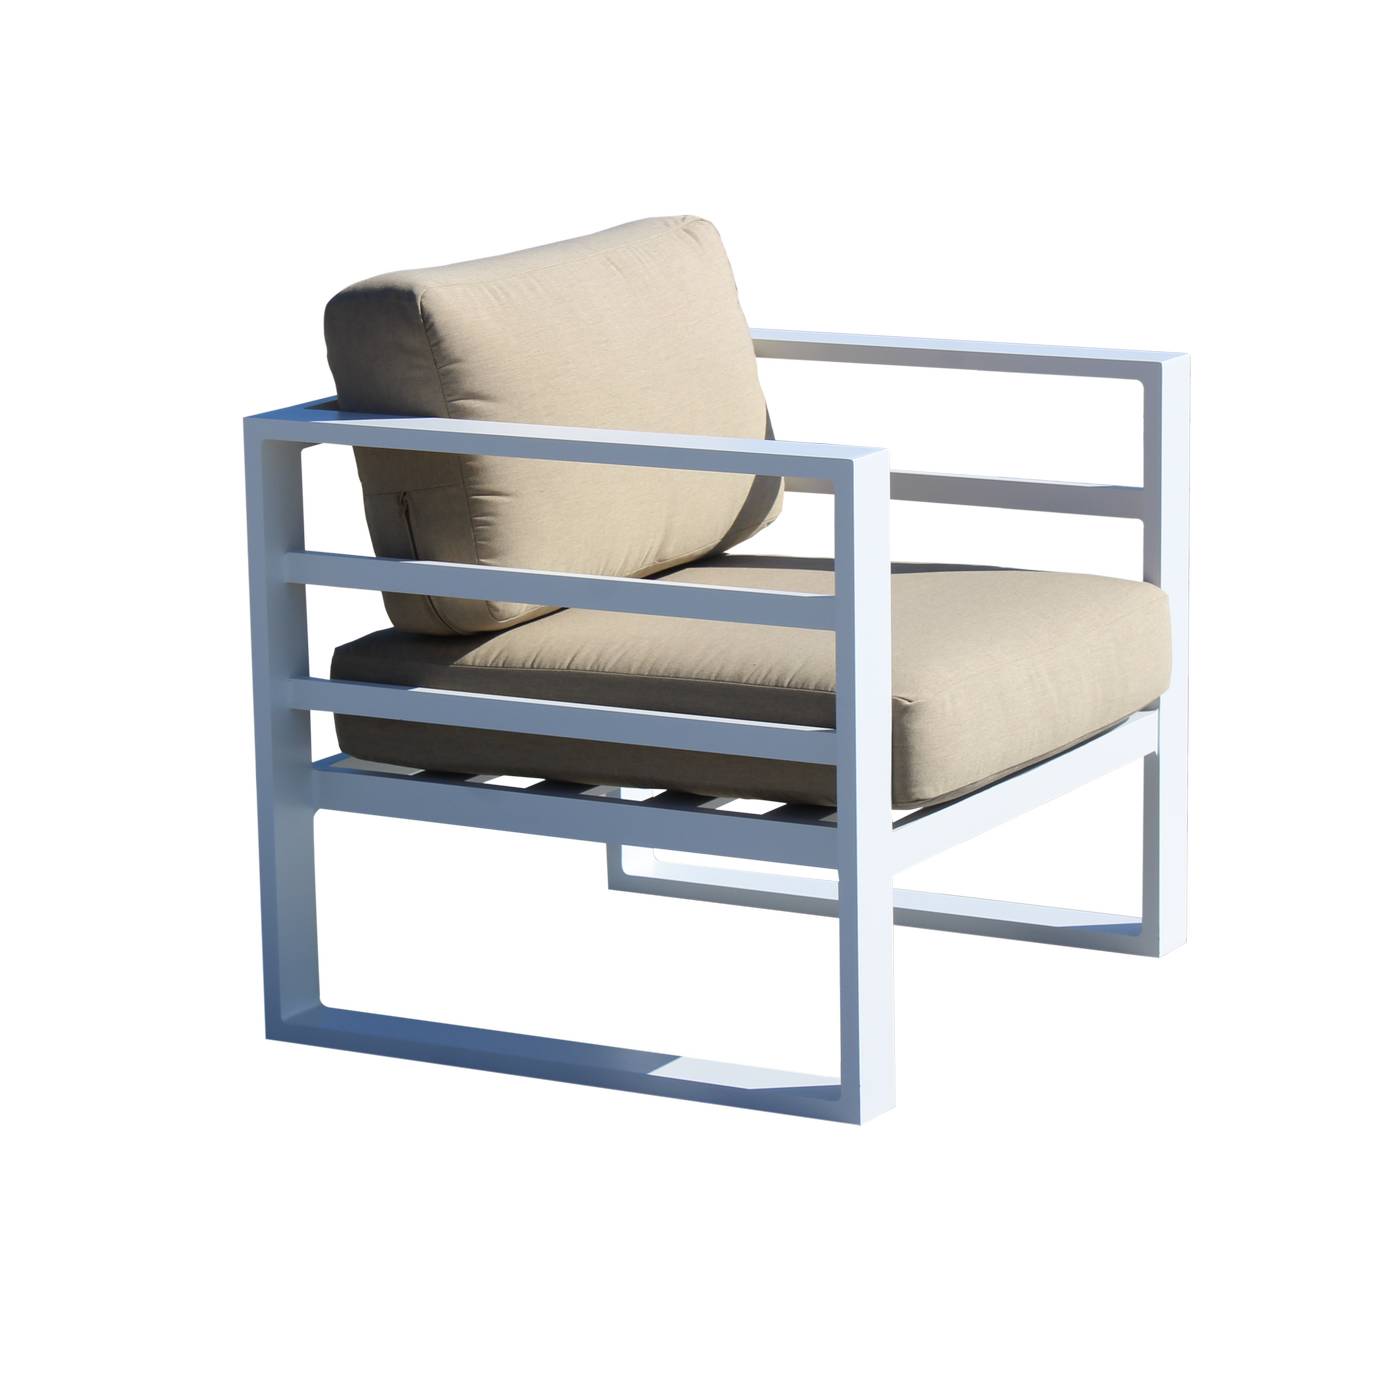 Set Aluminio Dalas-8 - Conjunto de aluminio para jardín o terraza: sofá 3 plazas + 2 sillones + mesa de centro. Disponible en color blanco, antracita, champagne, plata o marrón.